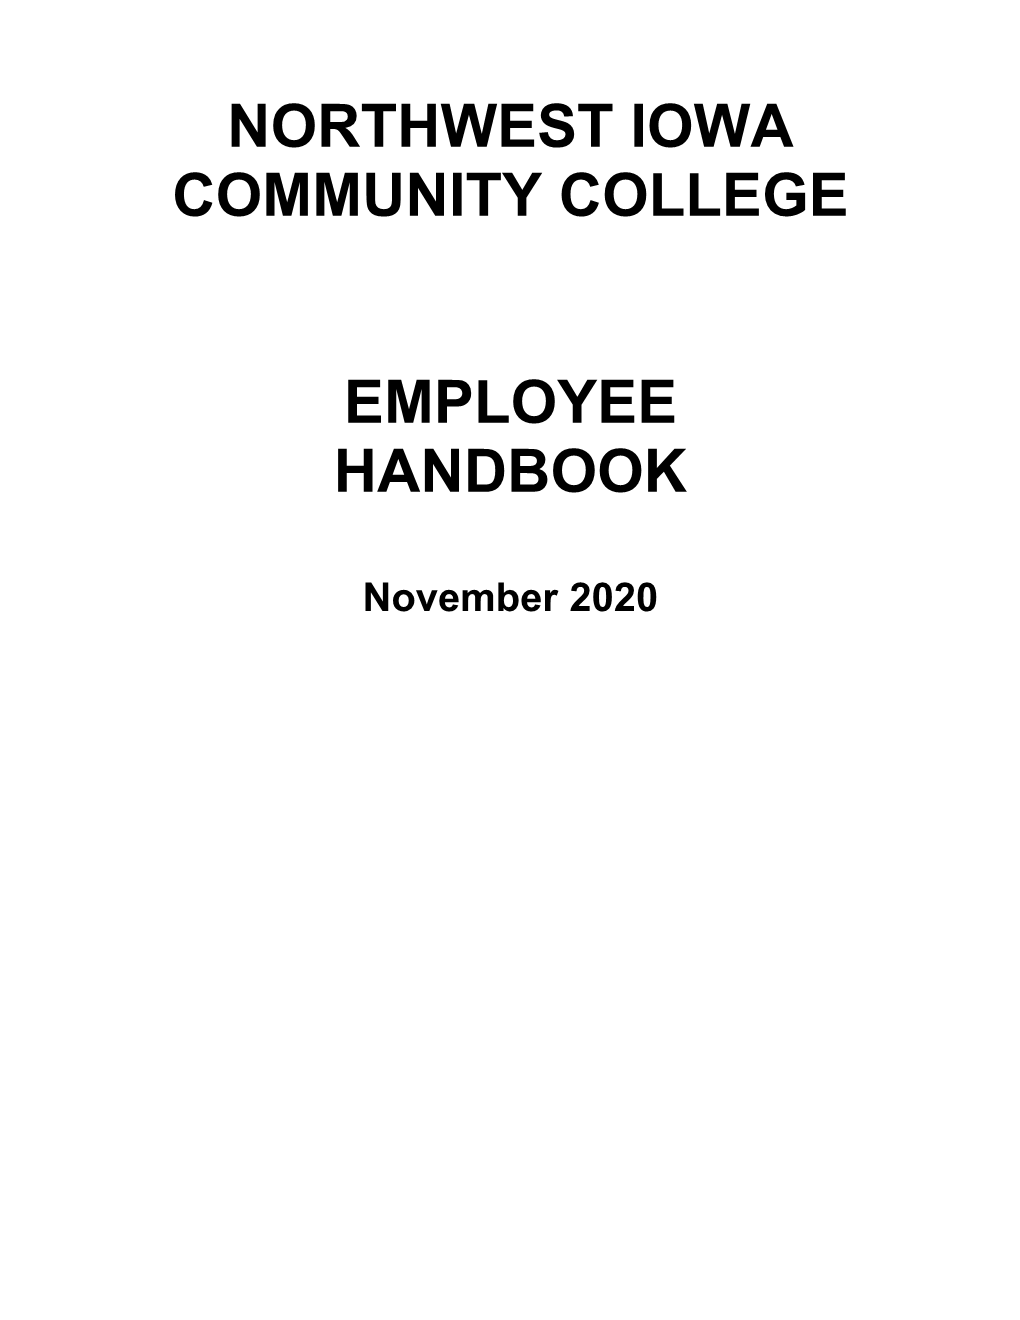 Northwest Iowa Community College Employee Handbook